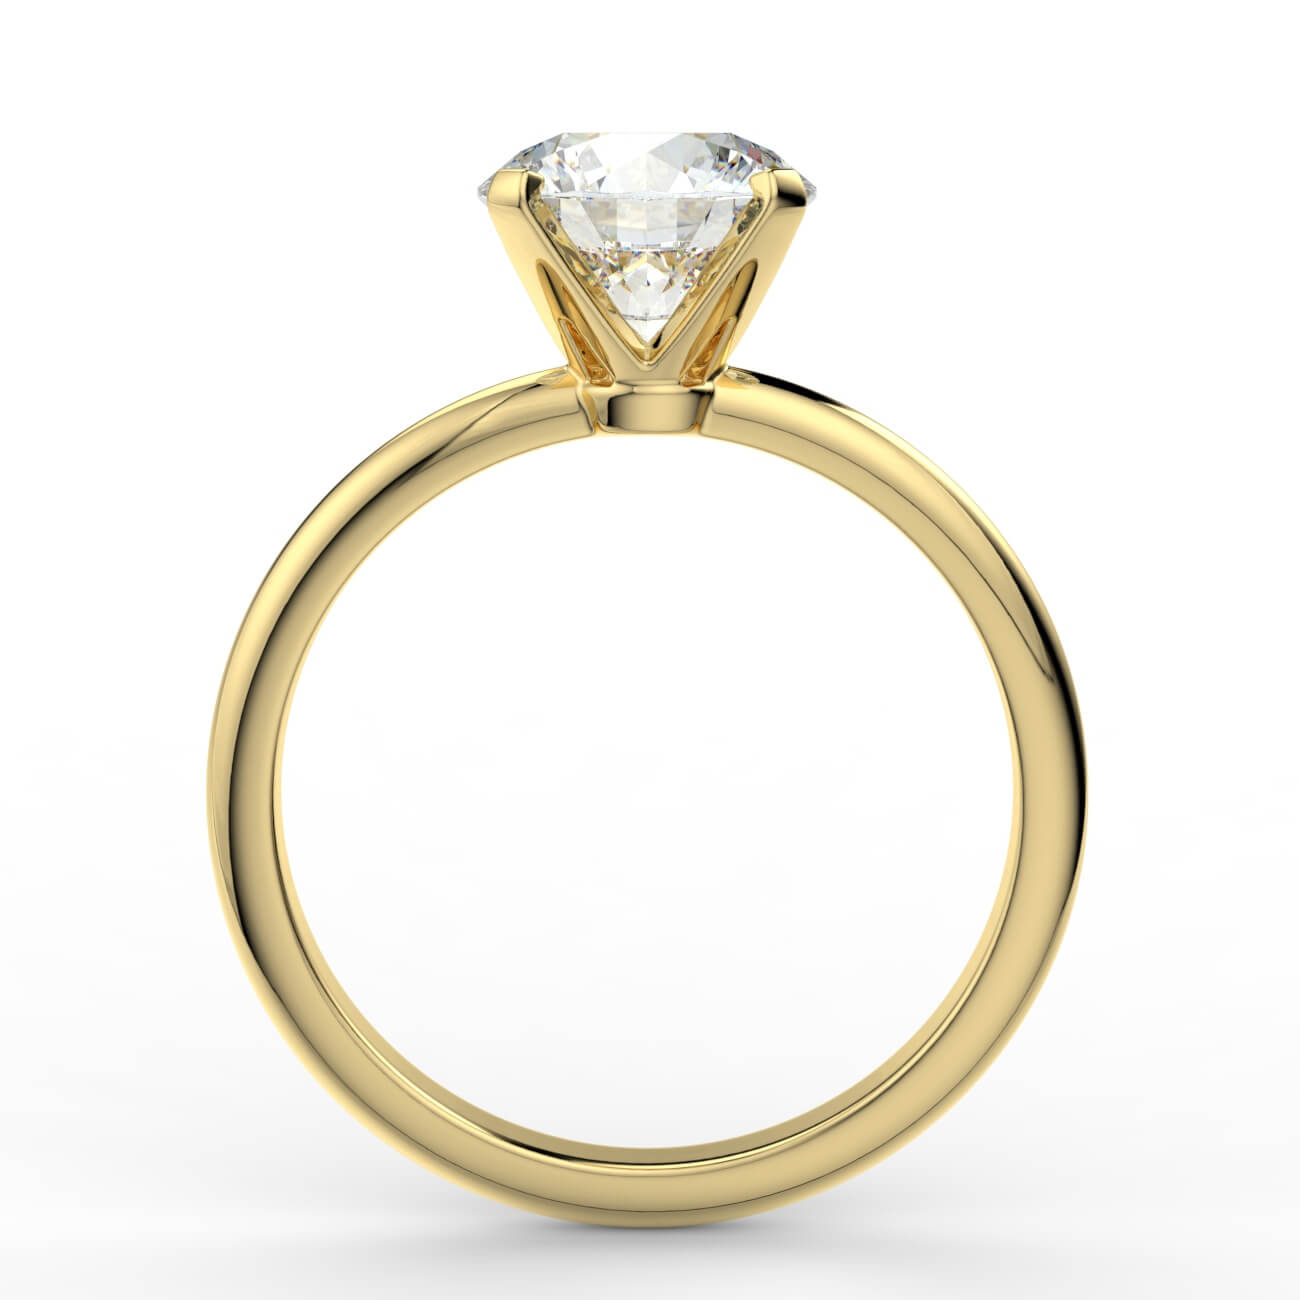 Knife-edge solitaire diamond engagement ring in yellow gold – Australian Diamond Network